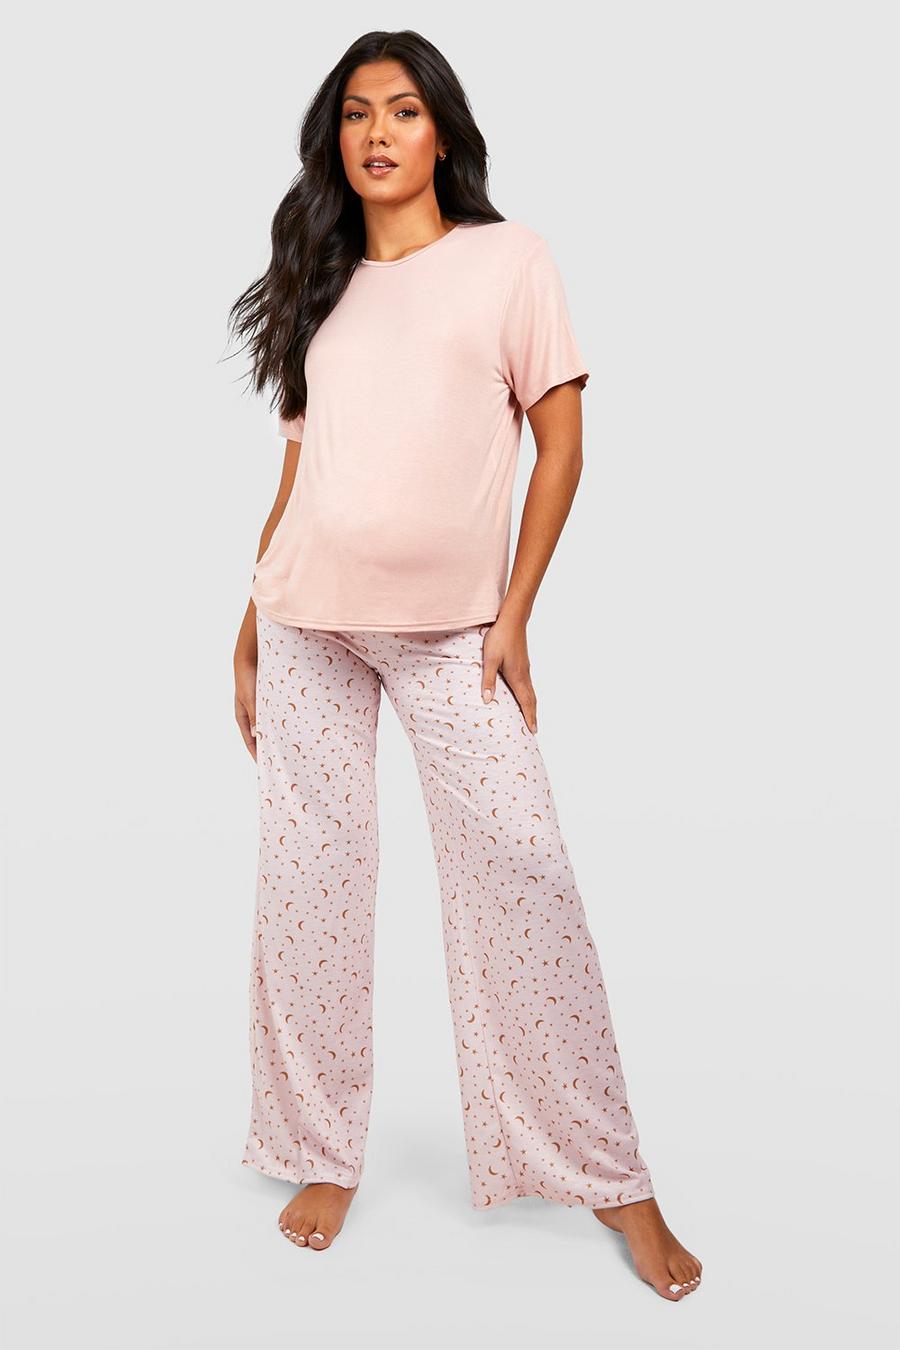 Set pigiama Premaman con stampa a stelle, Blush pink